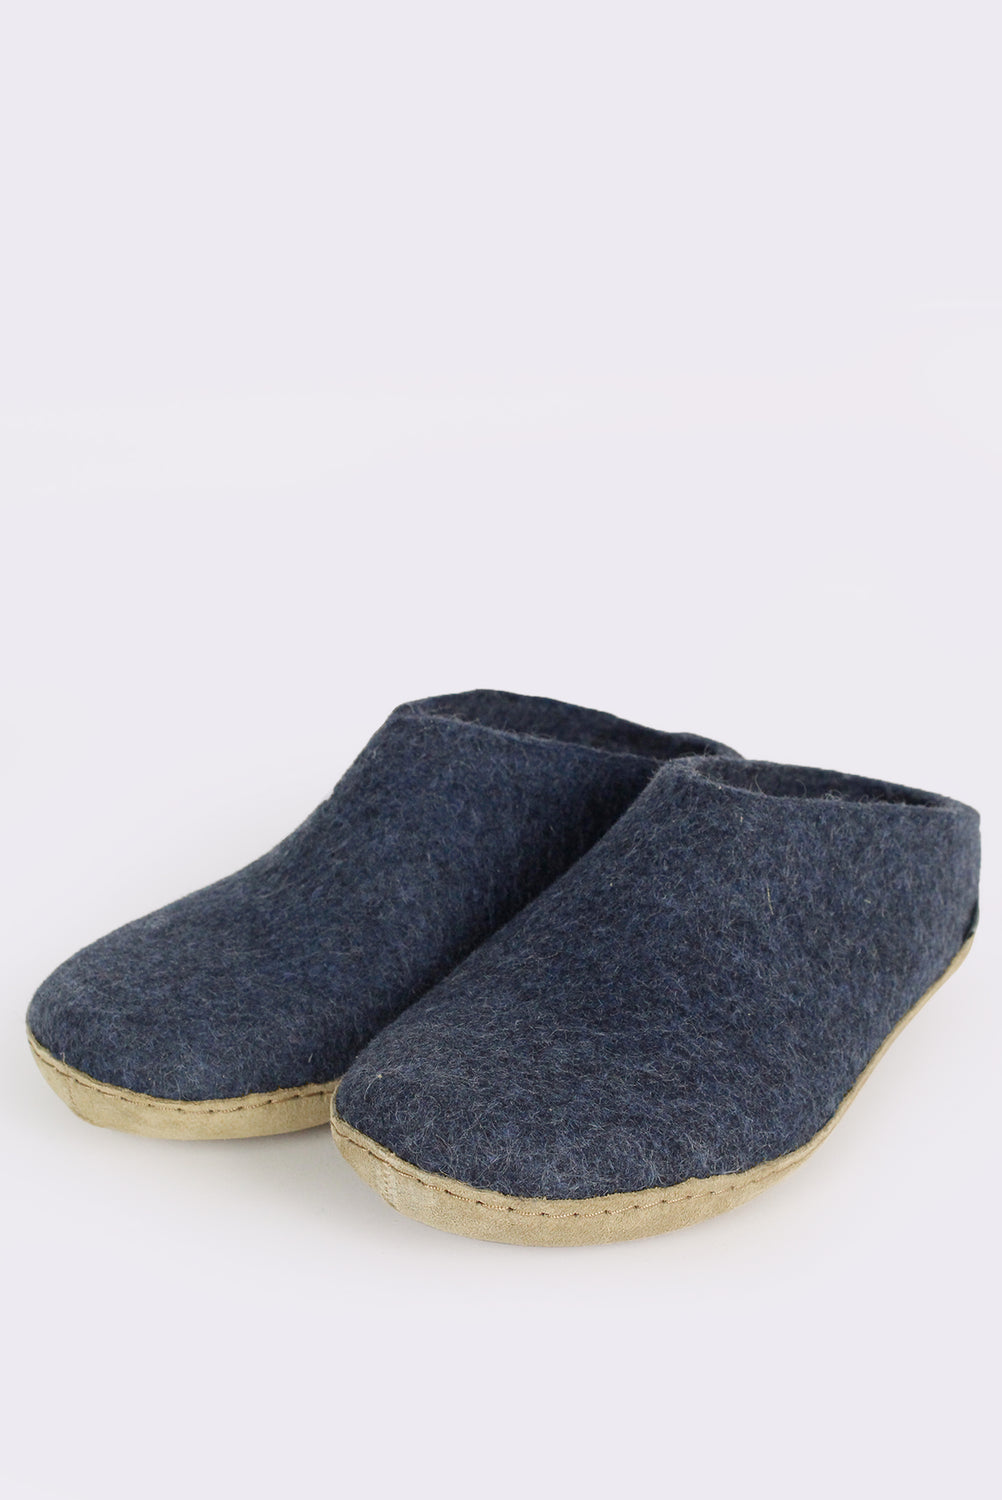 personalized fashion trend slippers denim cotton| Alibaba.com